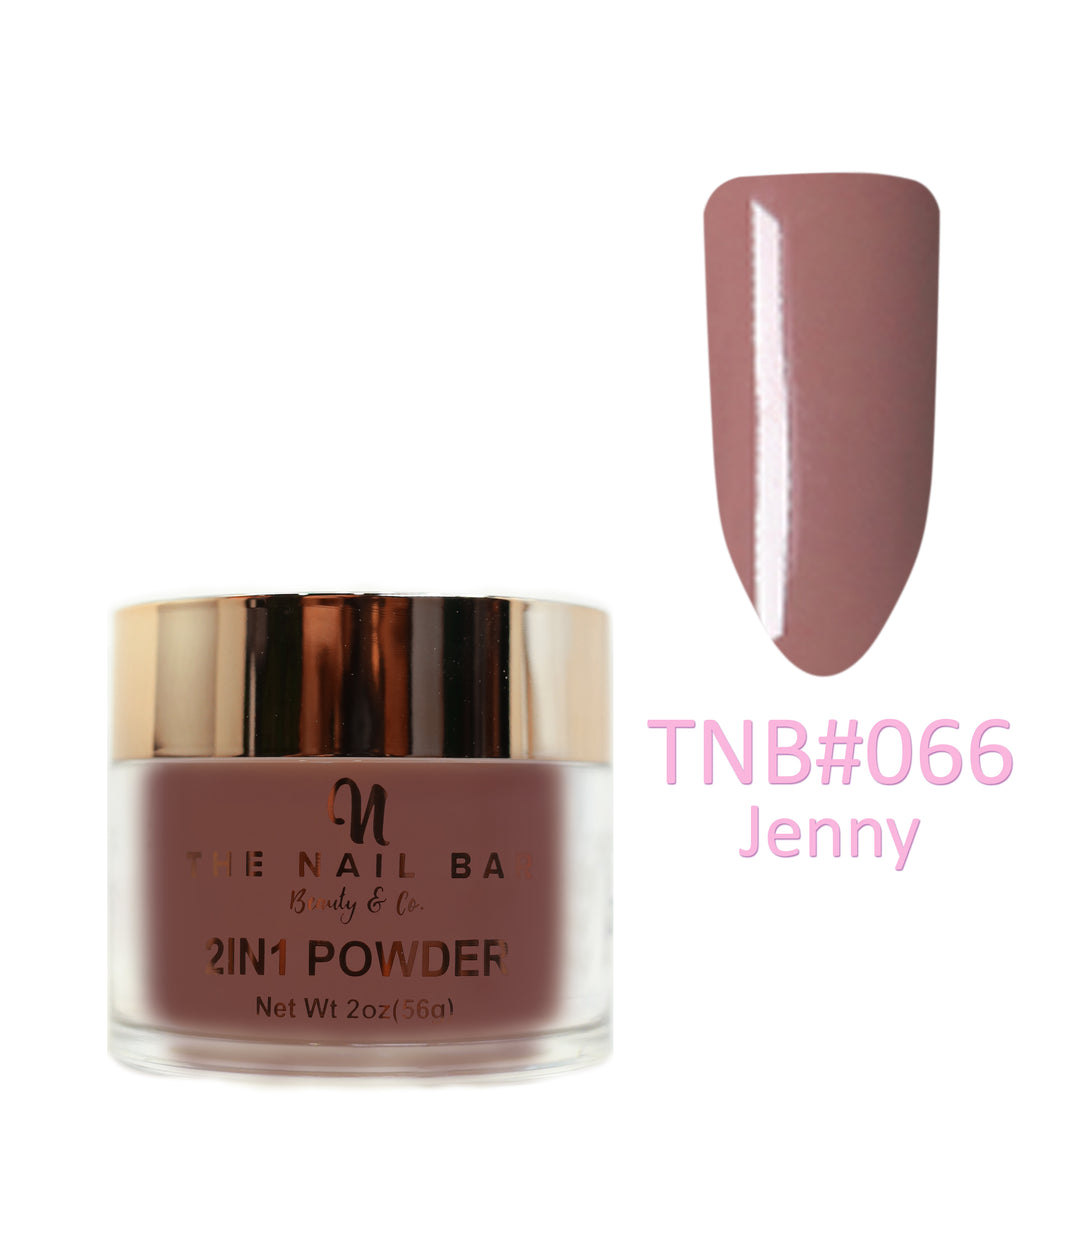 2-In-1 Dipping/Acrylic colour powder (2oz) -Jenny - The Nail Bar Beauty & Co.